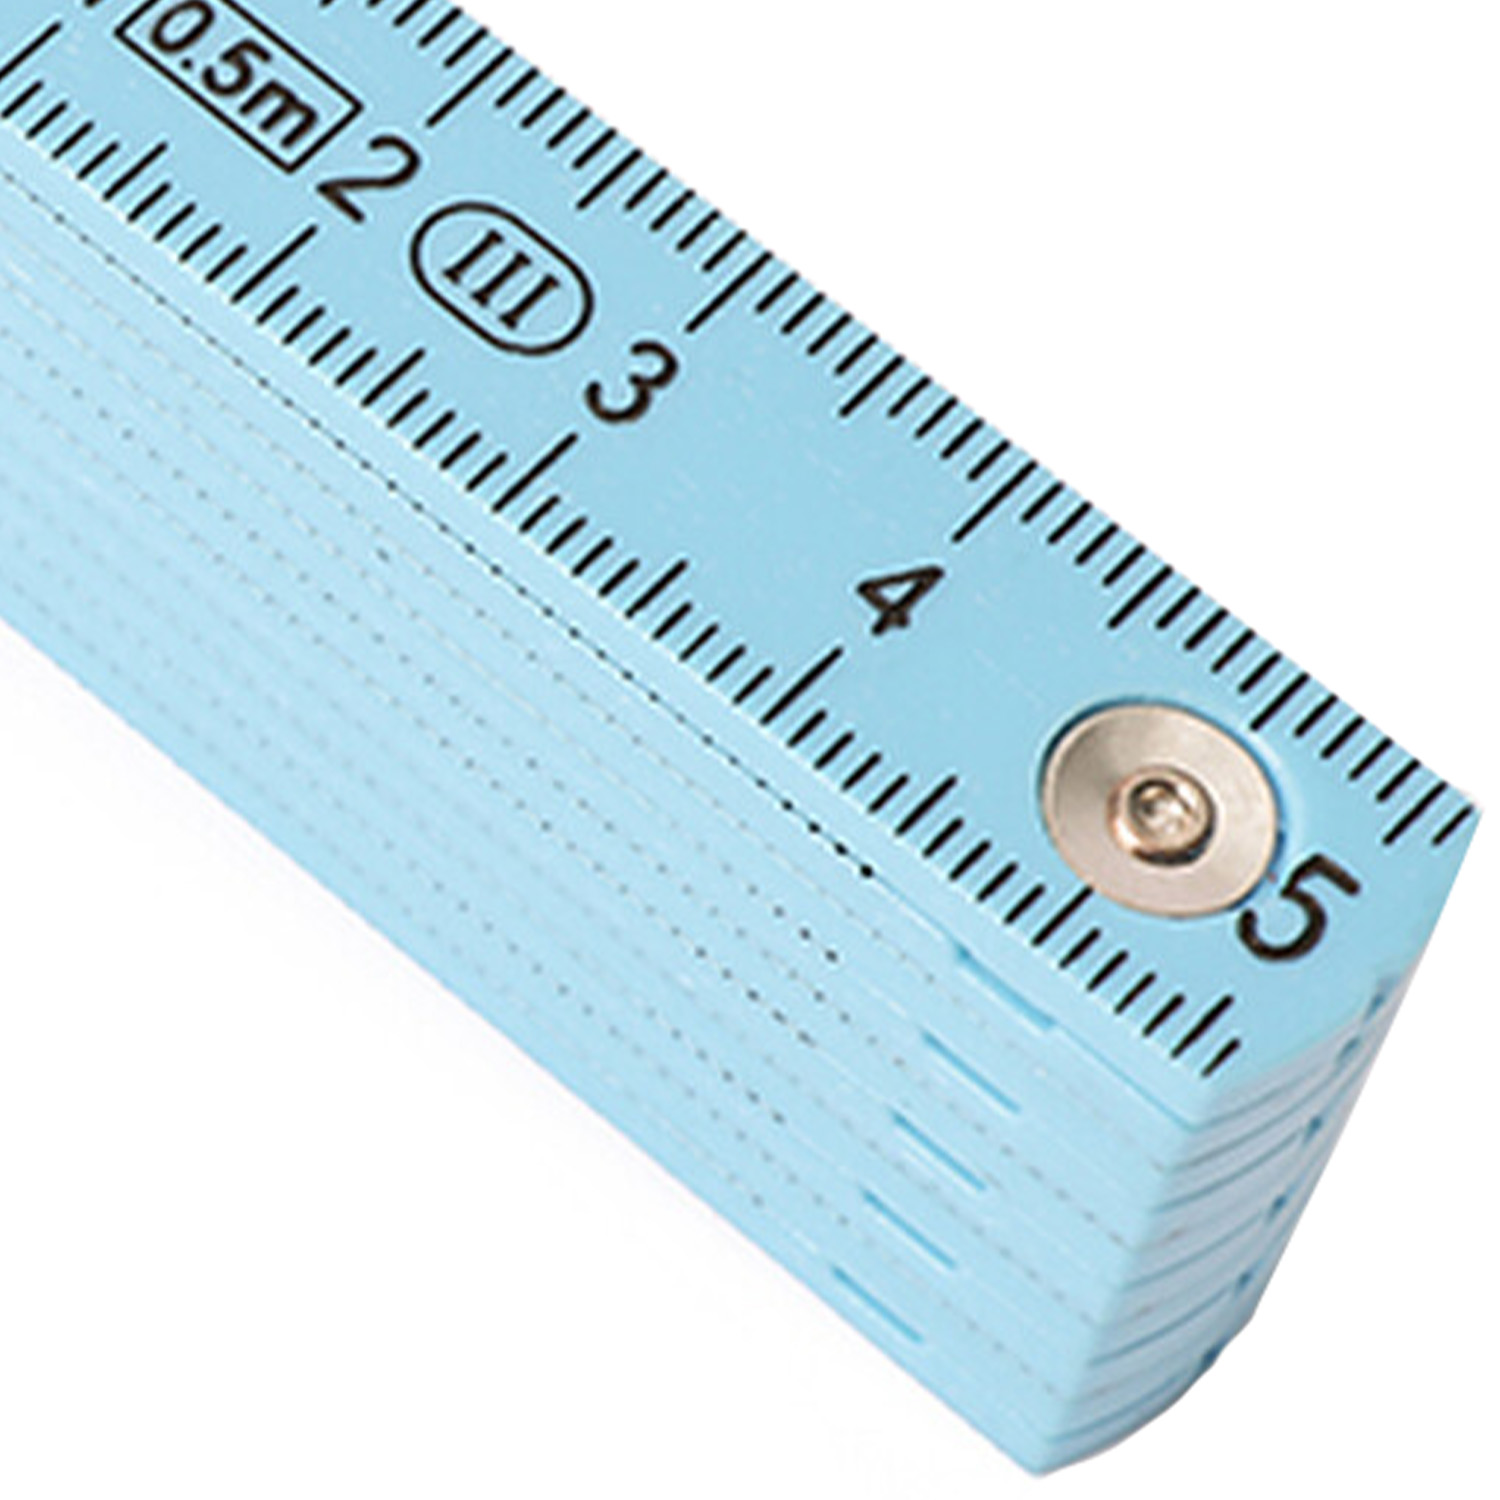 50cm Folding Ruler Keyring - Blue Image 2